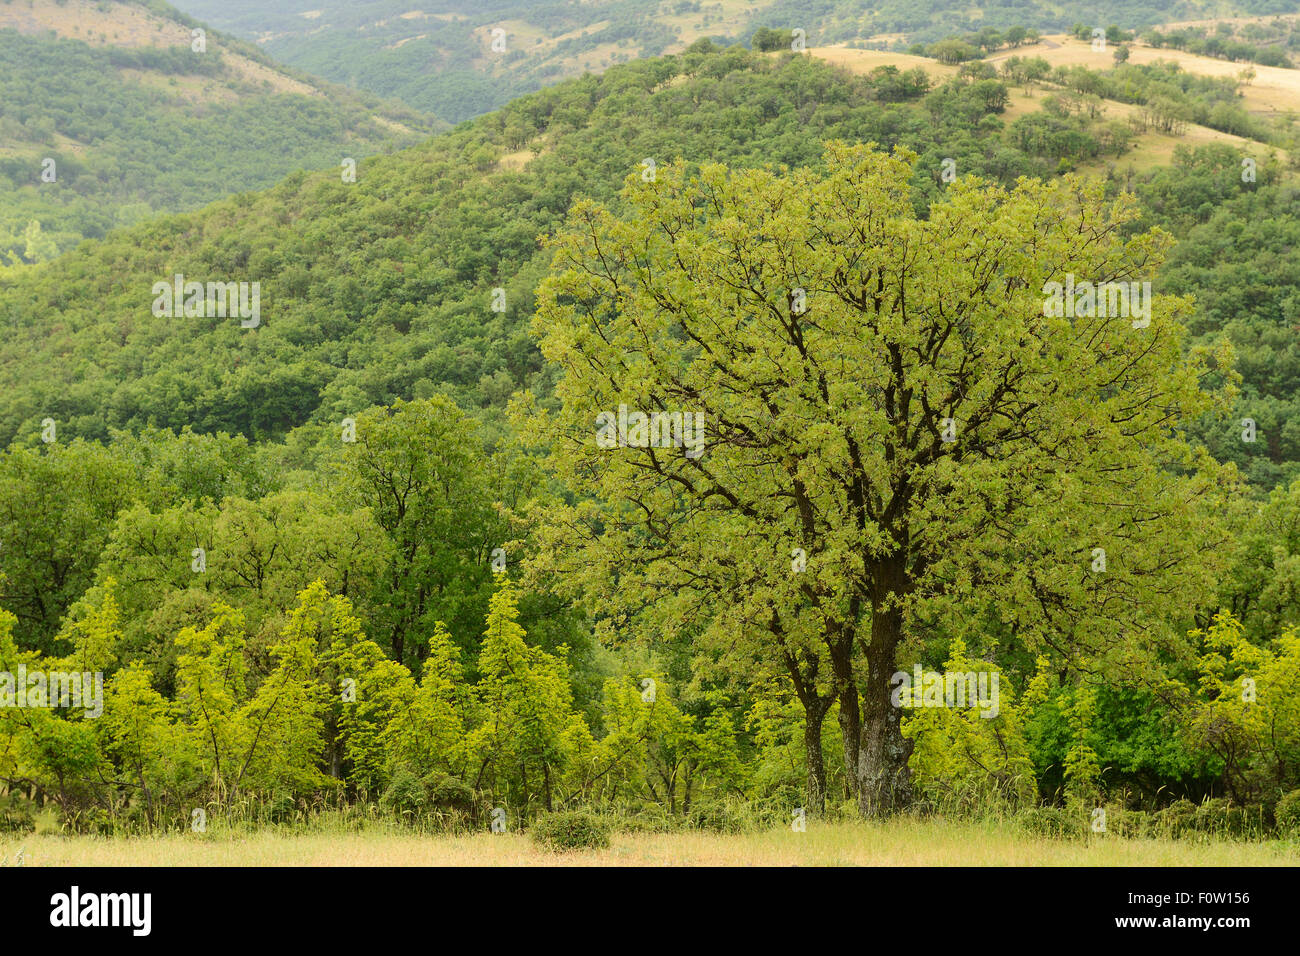 Oak tree (Quercus pubescens) in a landscape grazed by Fallow deer, (Dama dama) Studen Kladenets reserve, Eastern Rhodope Mountains, Bulgaria, May 2013. Stock Photo